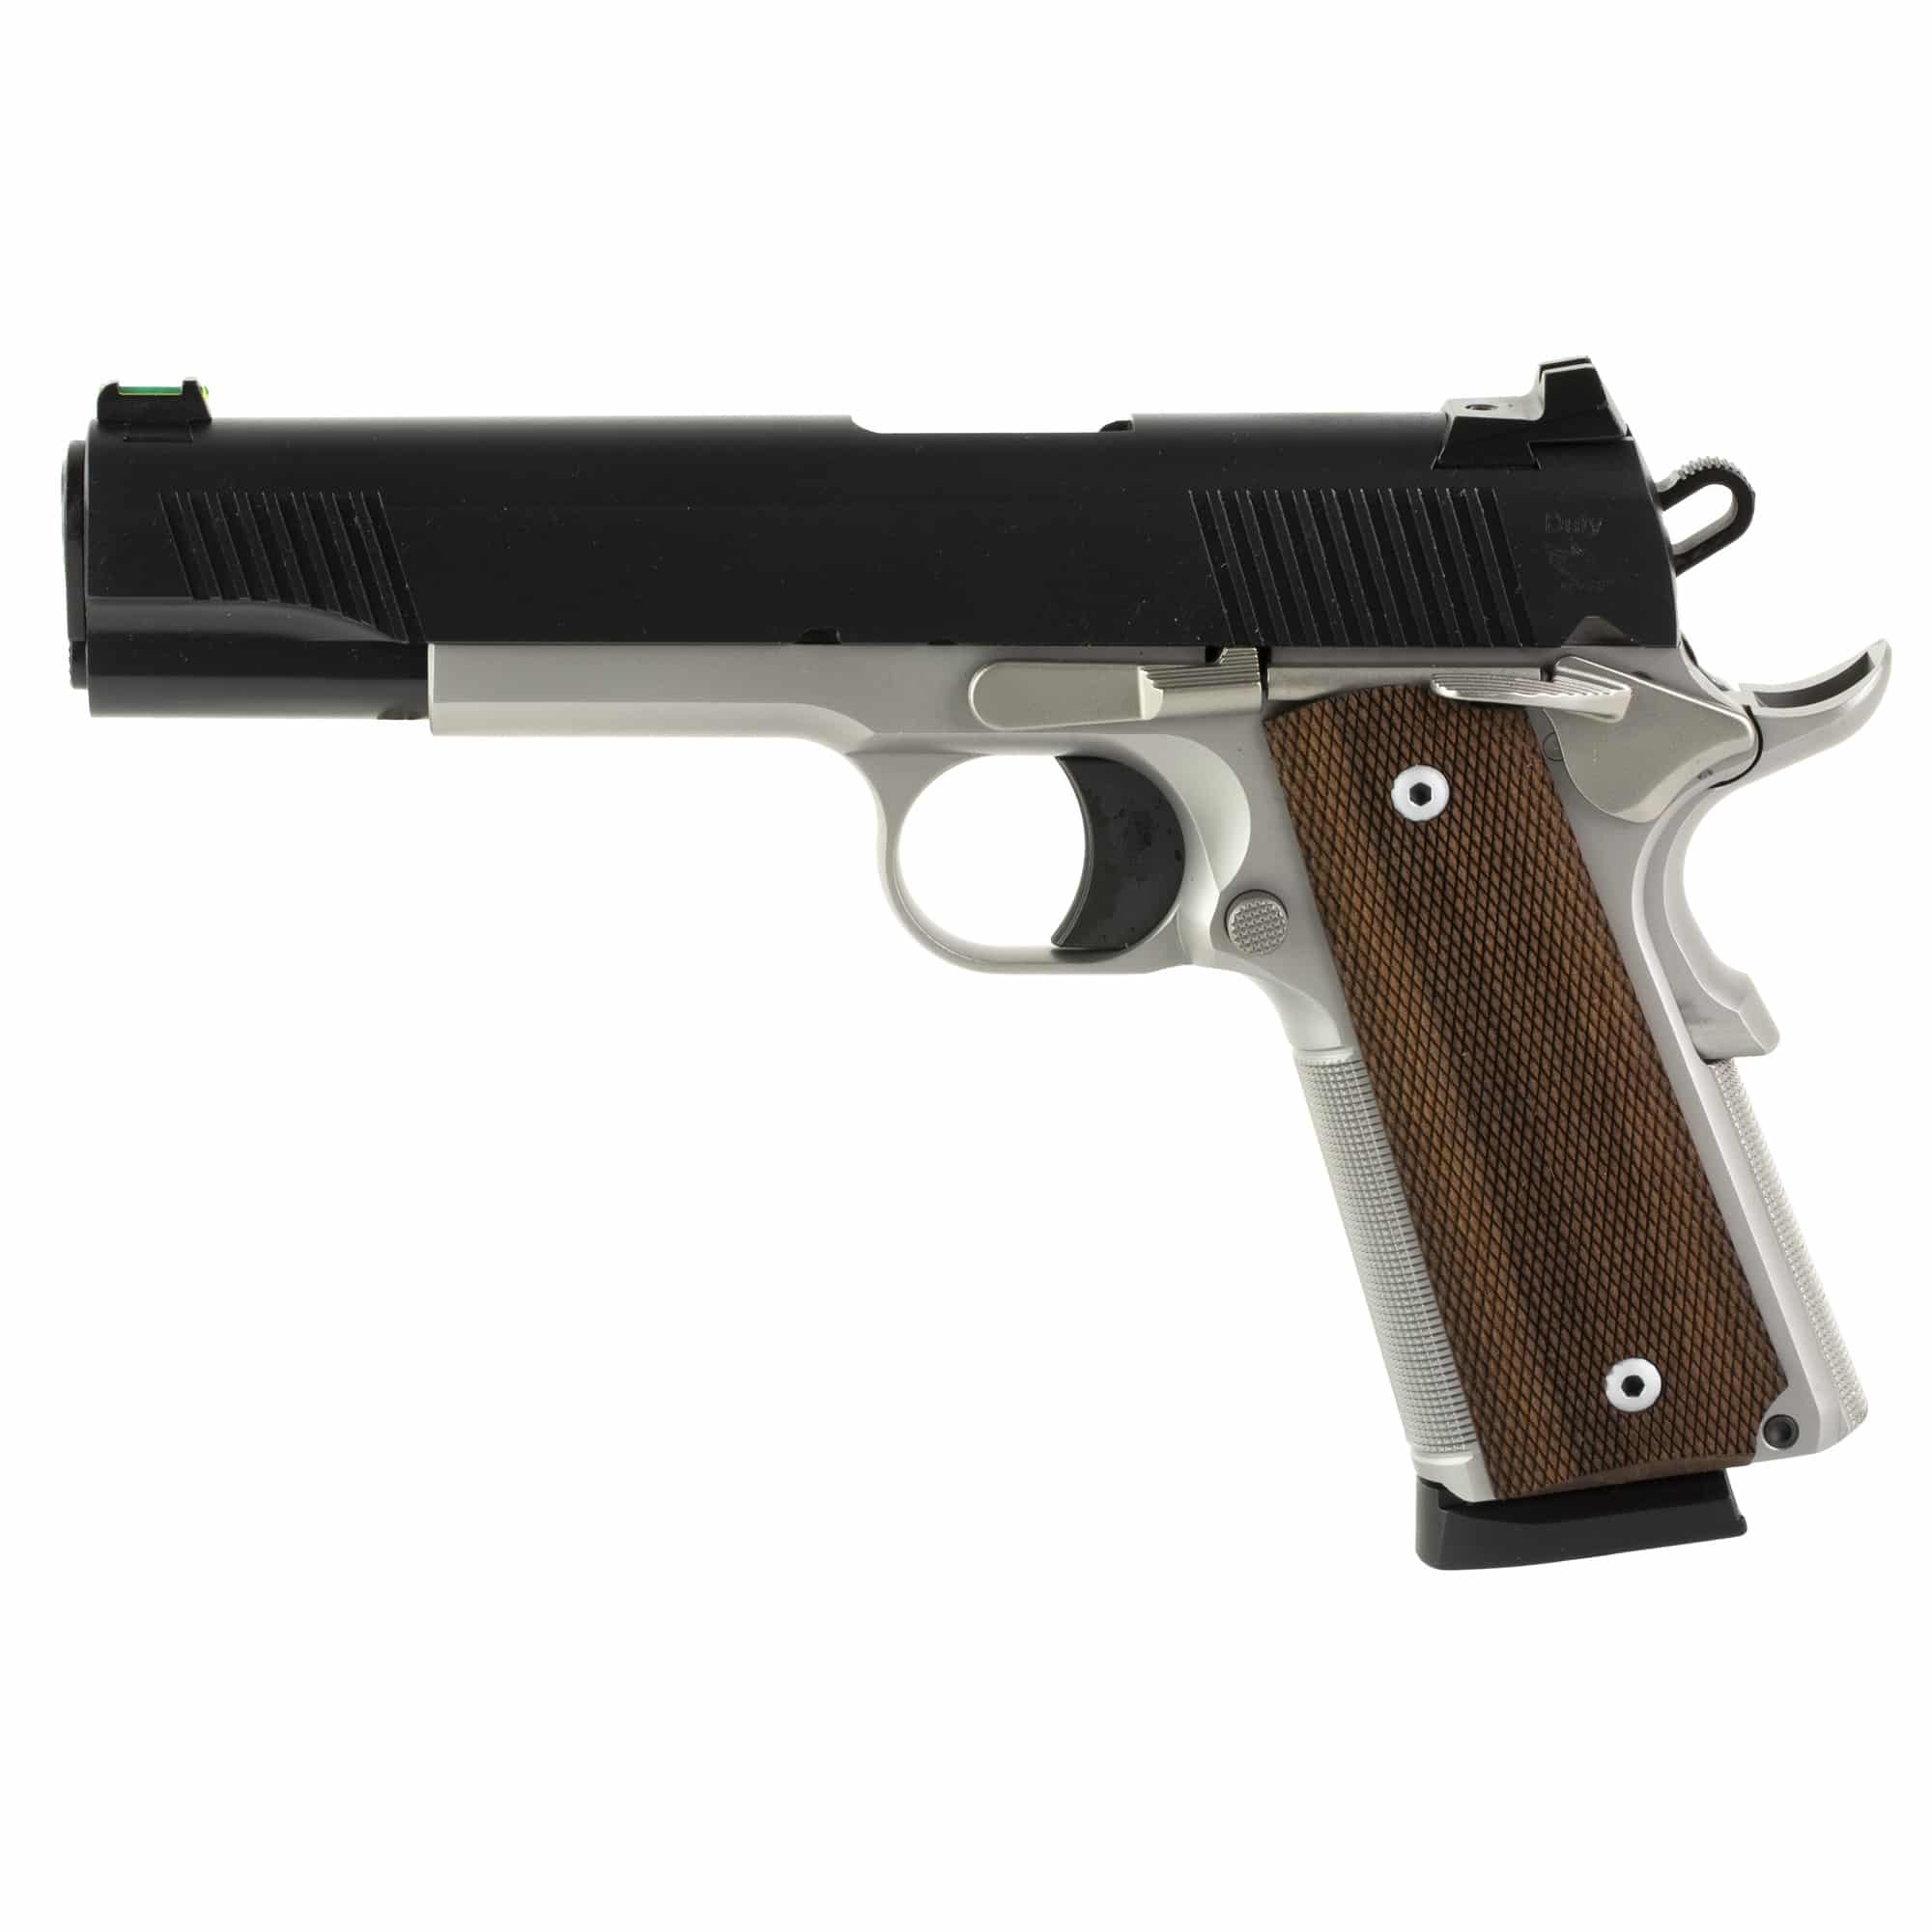 https://cityarsenal.com/product/tisas-duty-enhanced-1911-pistol-45acp-5-barrel-stainless-steel-frame-silver-black-slide-checkered-wood-grips-10100551/